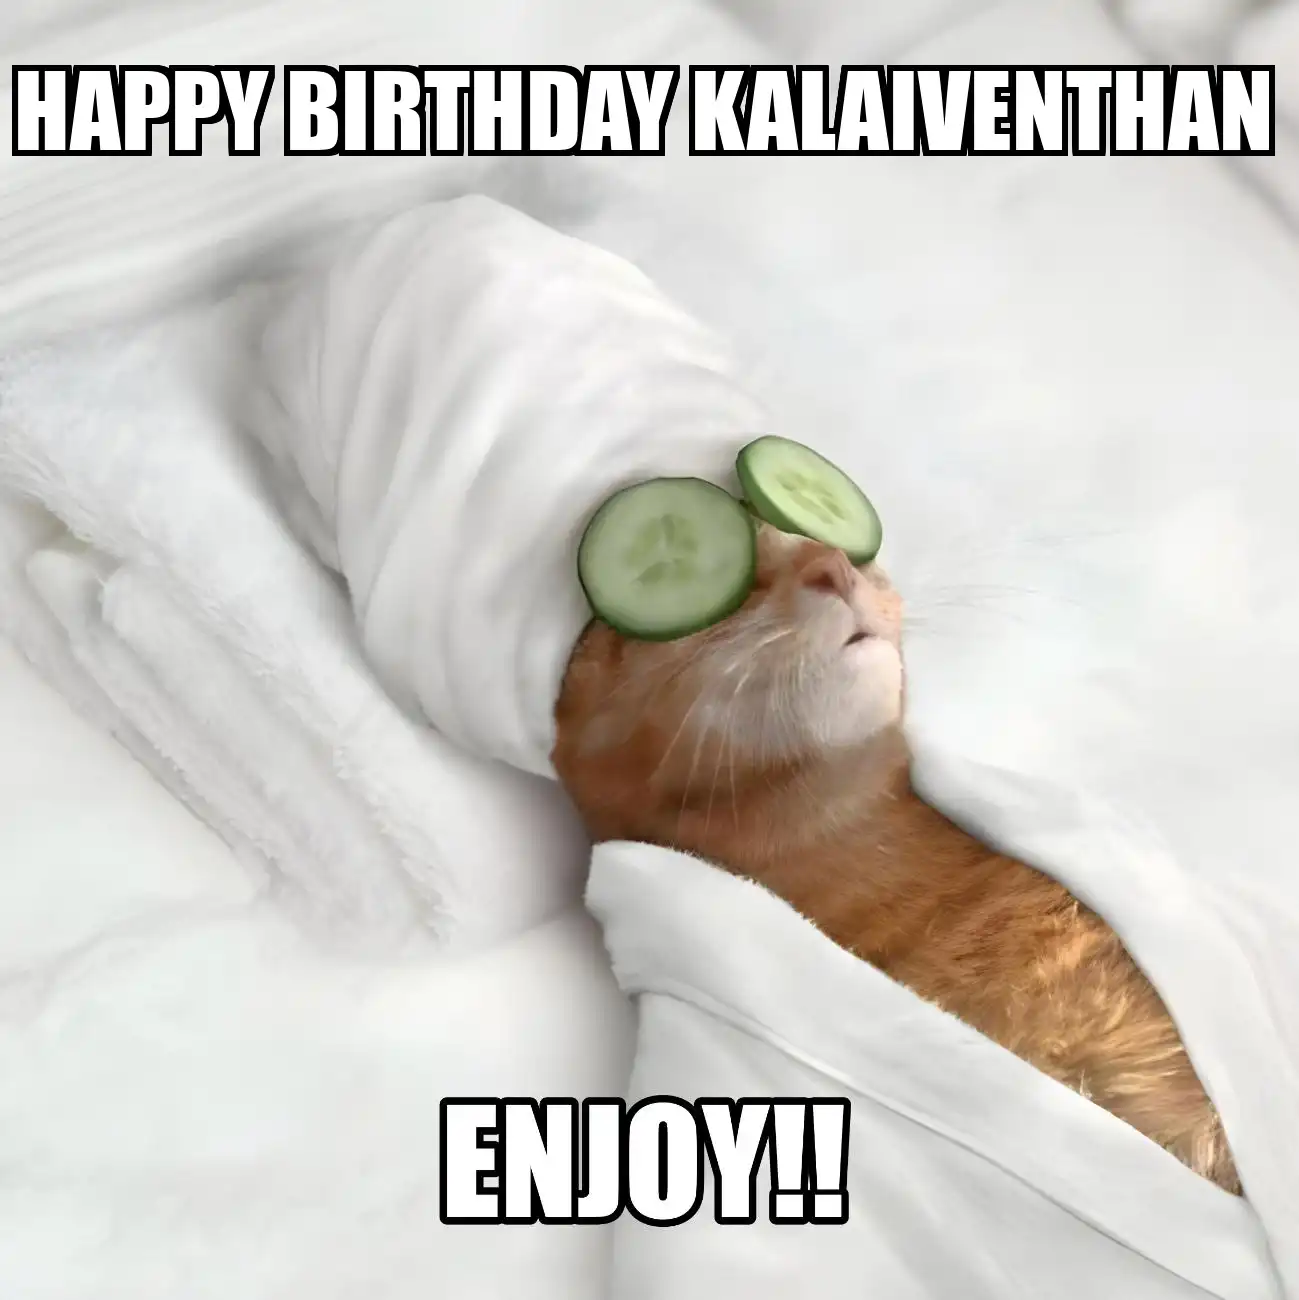 Happy Birthday Kalaiventhan Enjoy Cat Meme